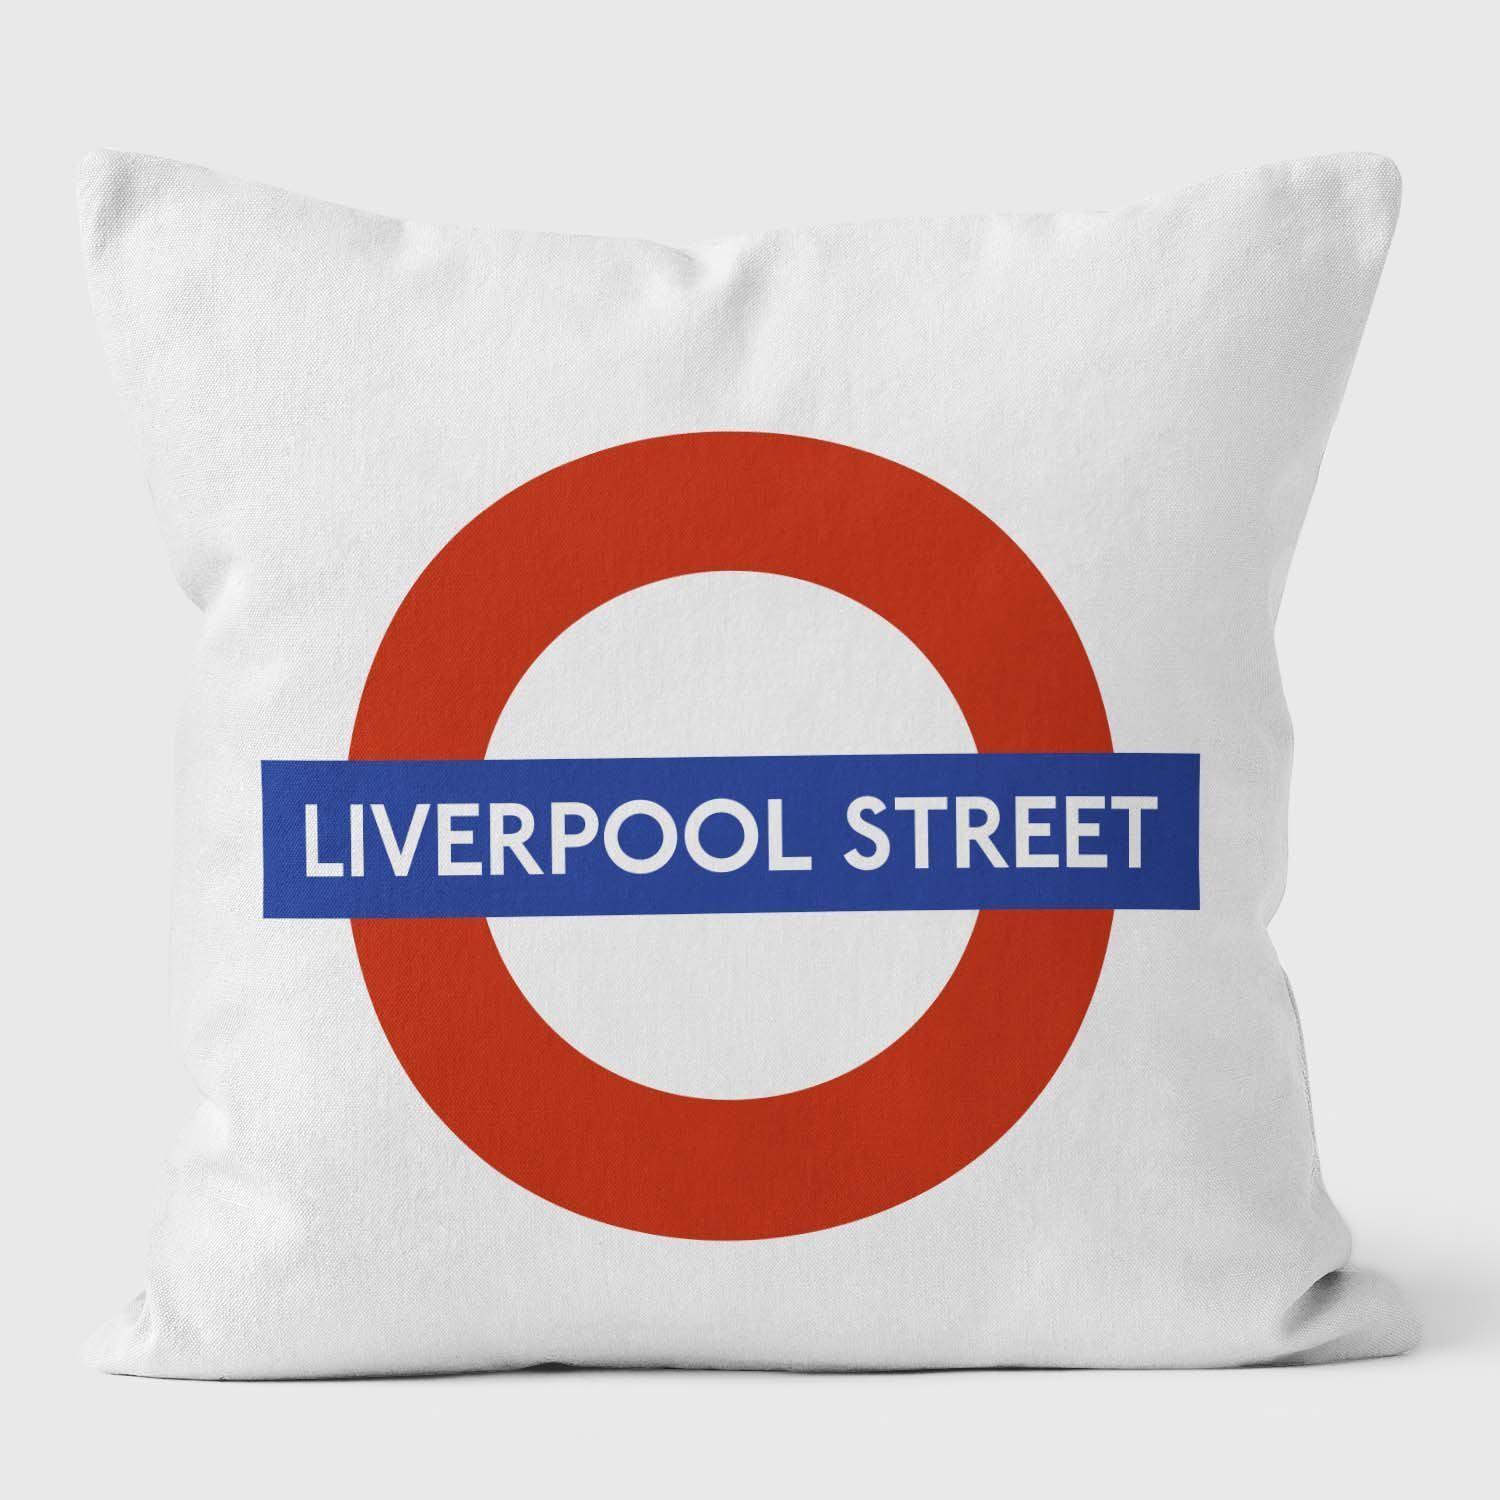 Liverpool Street London Underground Tube Station Roundel Cushion - Handmade Cushions UK - WeLoveCushions